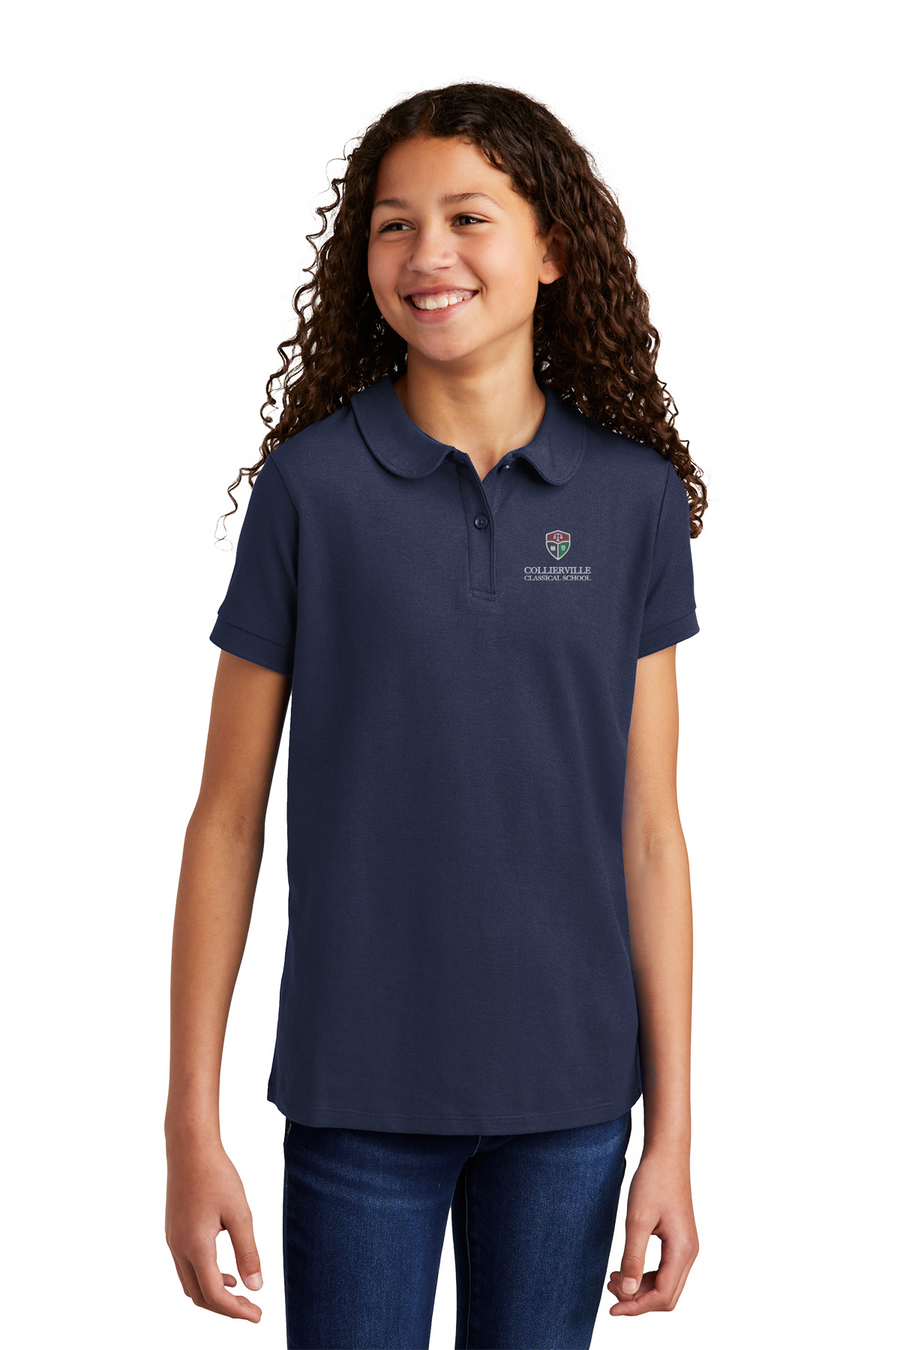 CCS - Port Authority Girls Silk Touch - Peter Pan Collar - Premium School Uniform from Pat's Monograms - Just $22! Shop now at Pat's Monograms